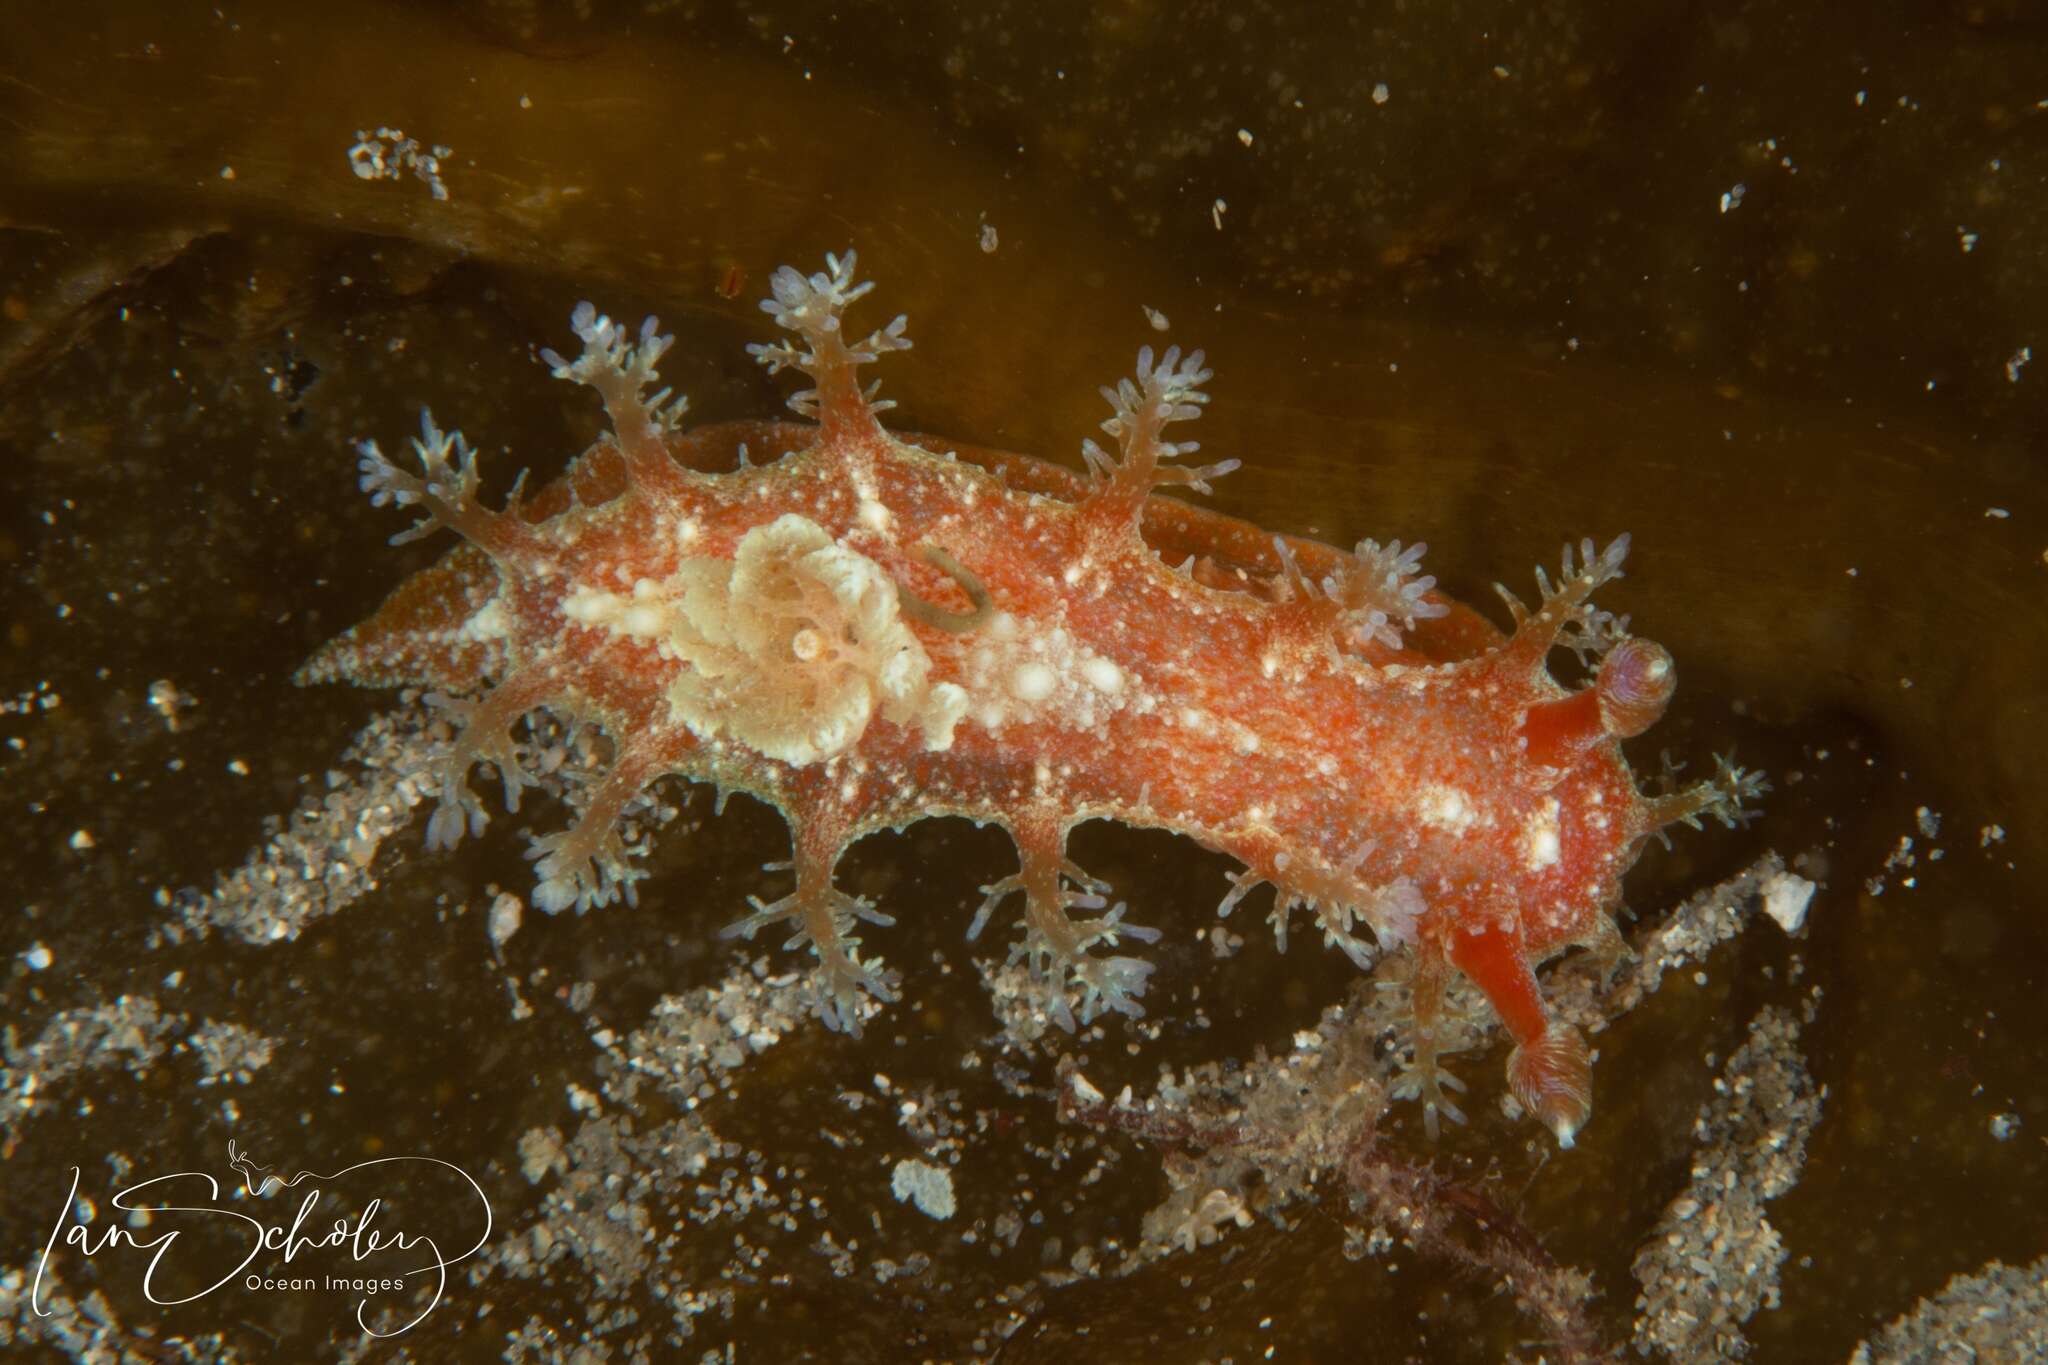 Image of Tasselled nudibranch